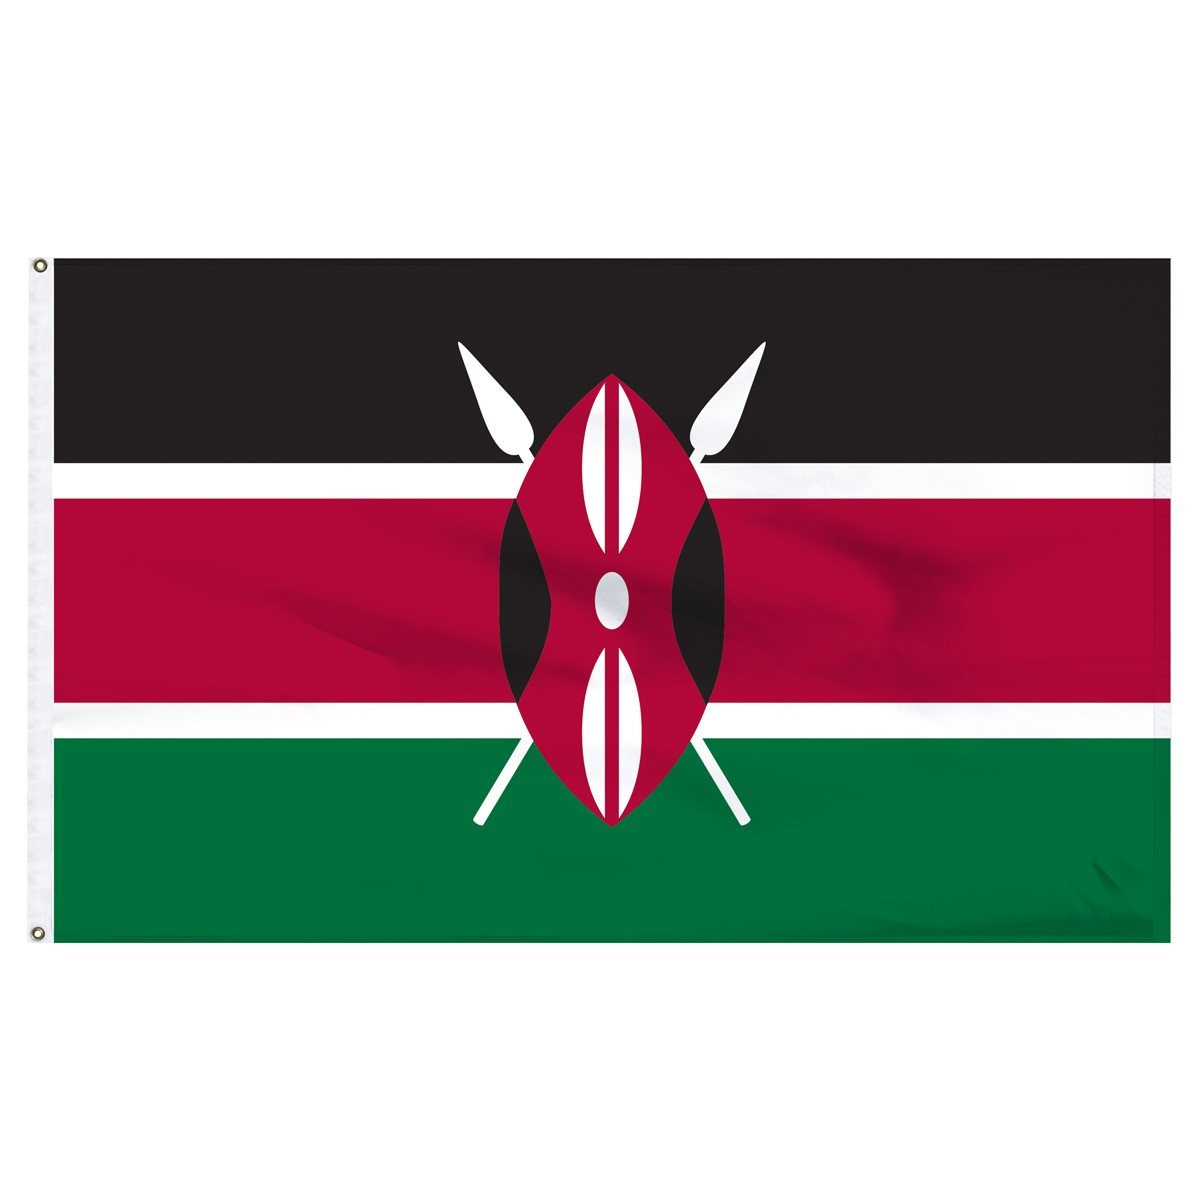 Kenya 5' x 8' Outdoor Nylon Flag